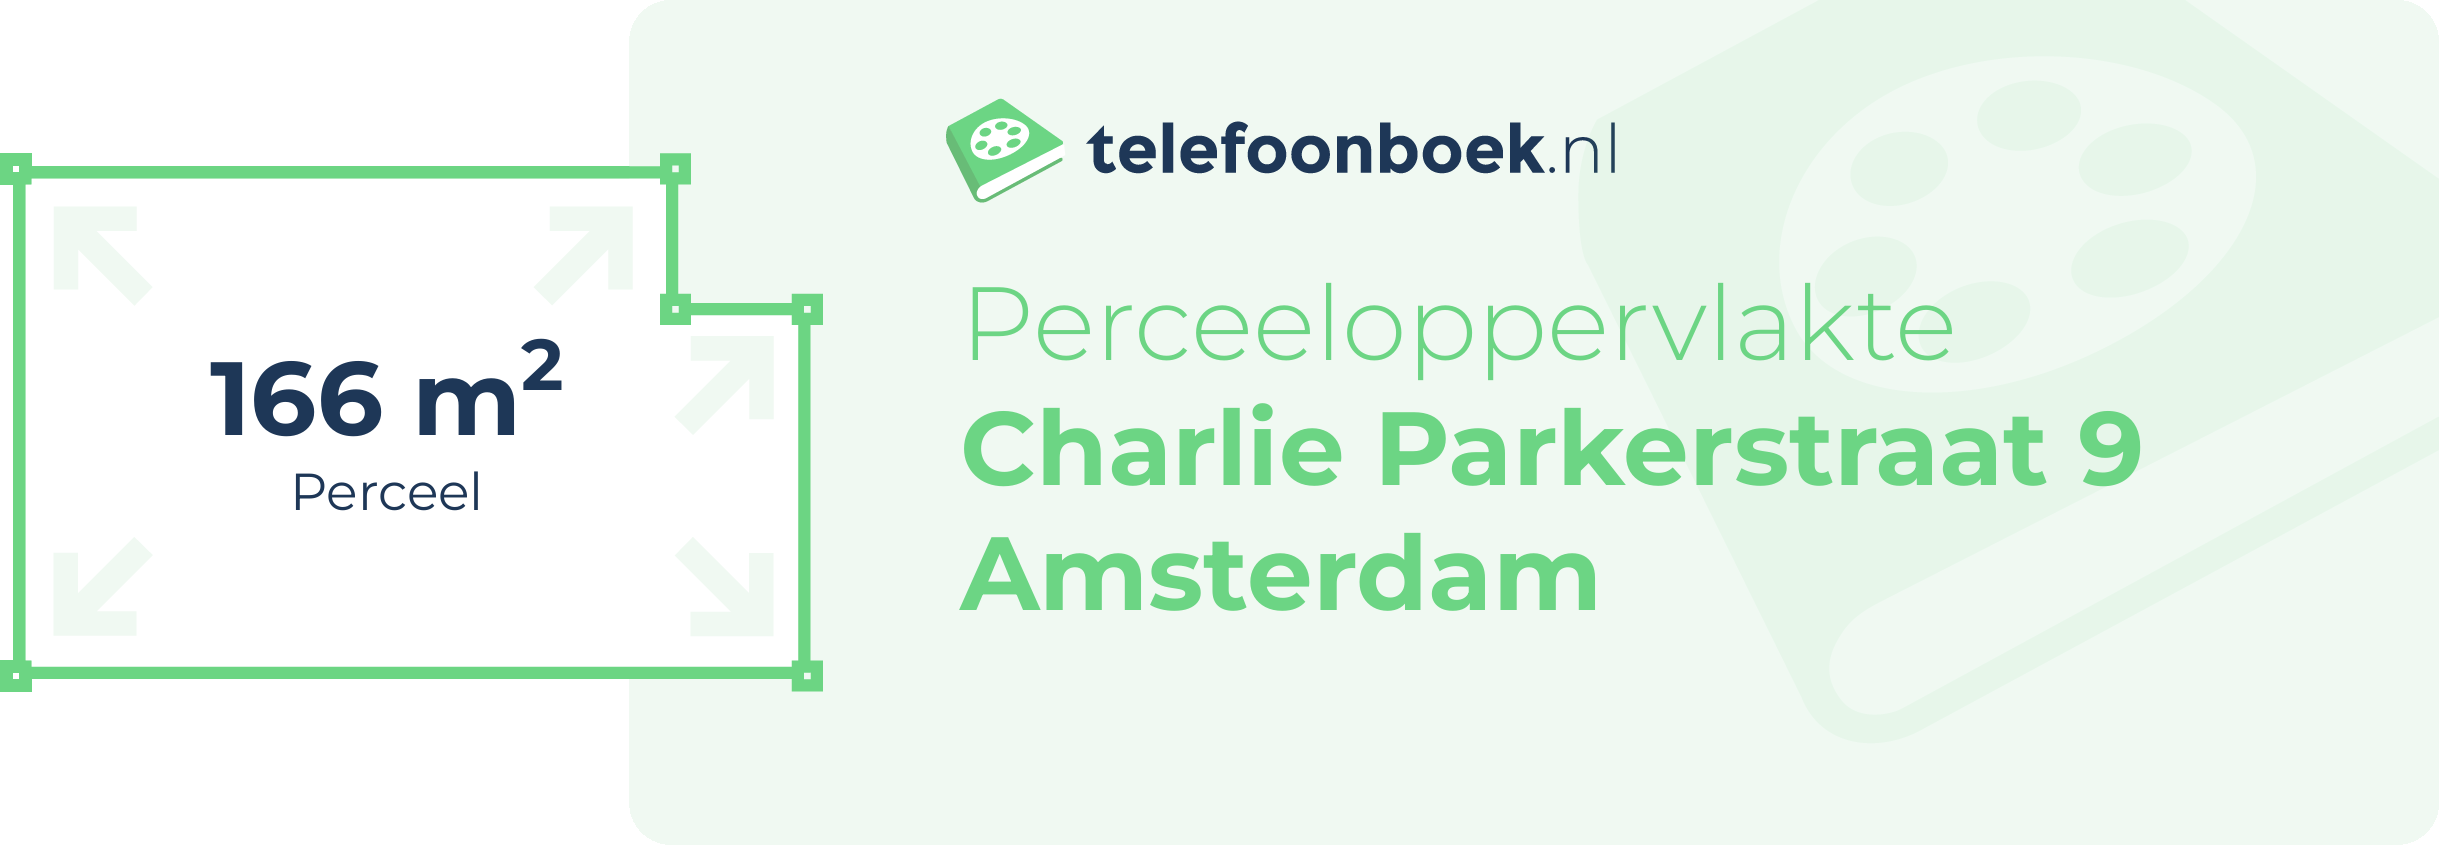 Perceeloppervlakte Charlie Parkerstraat 9 Amsterdam